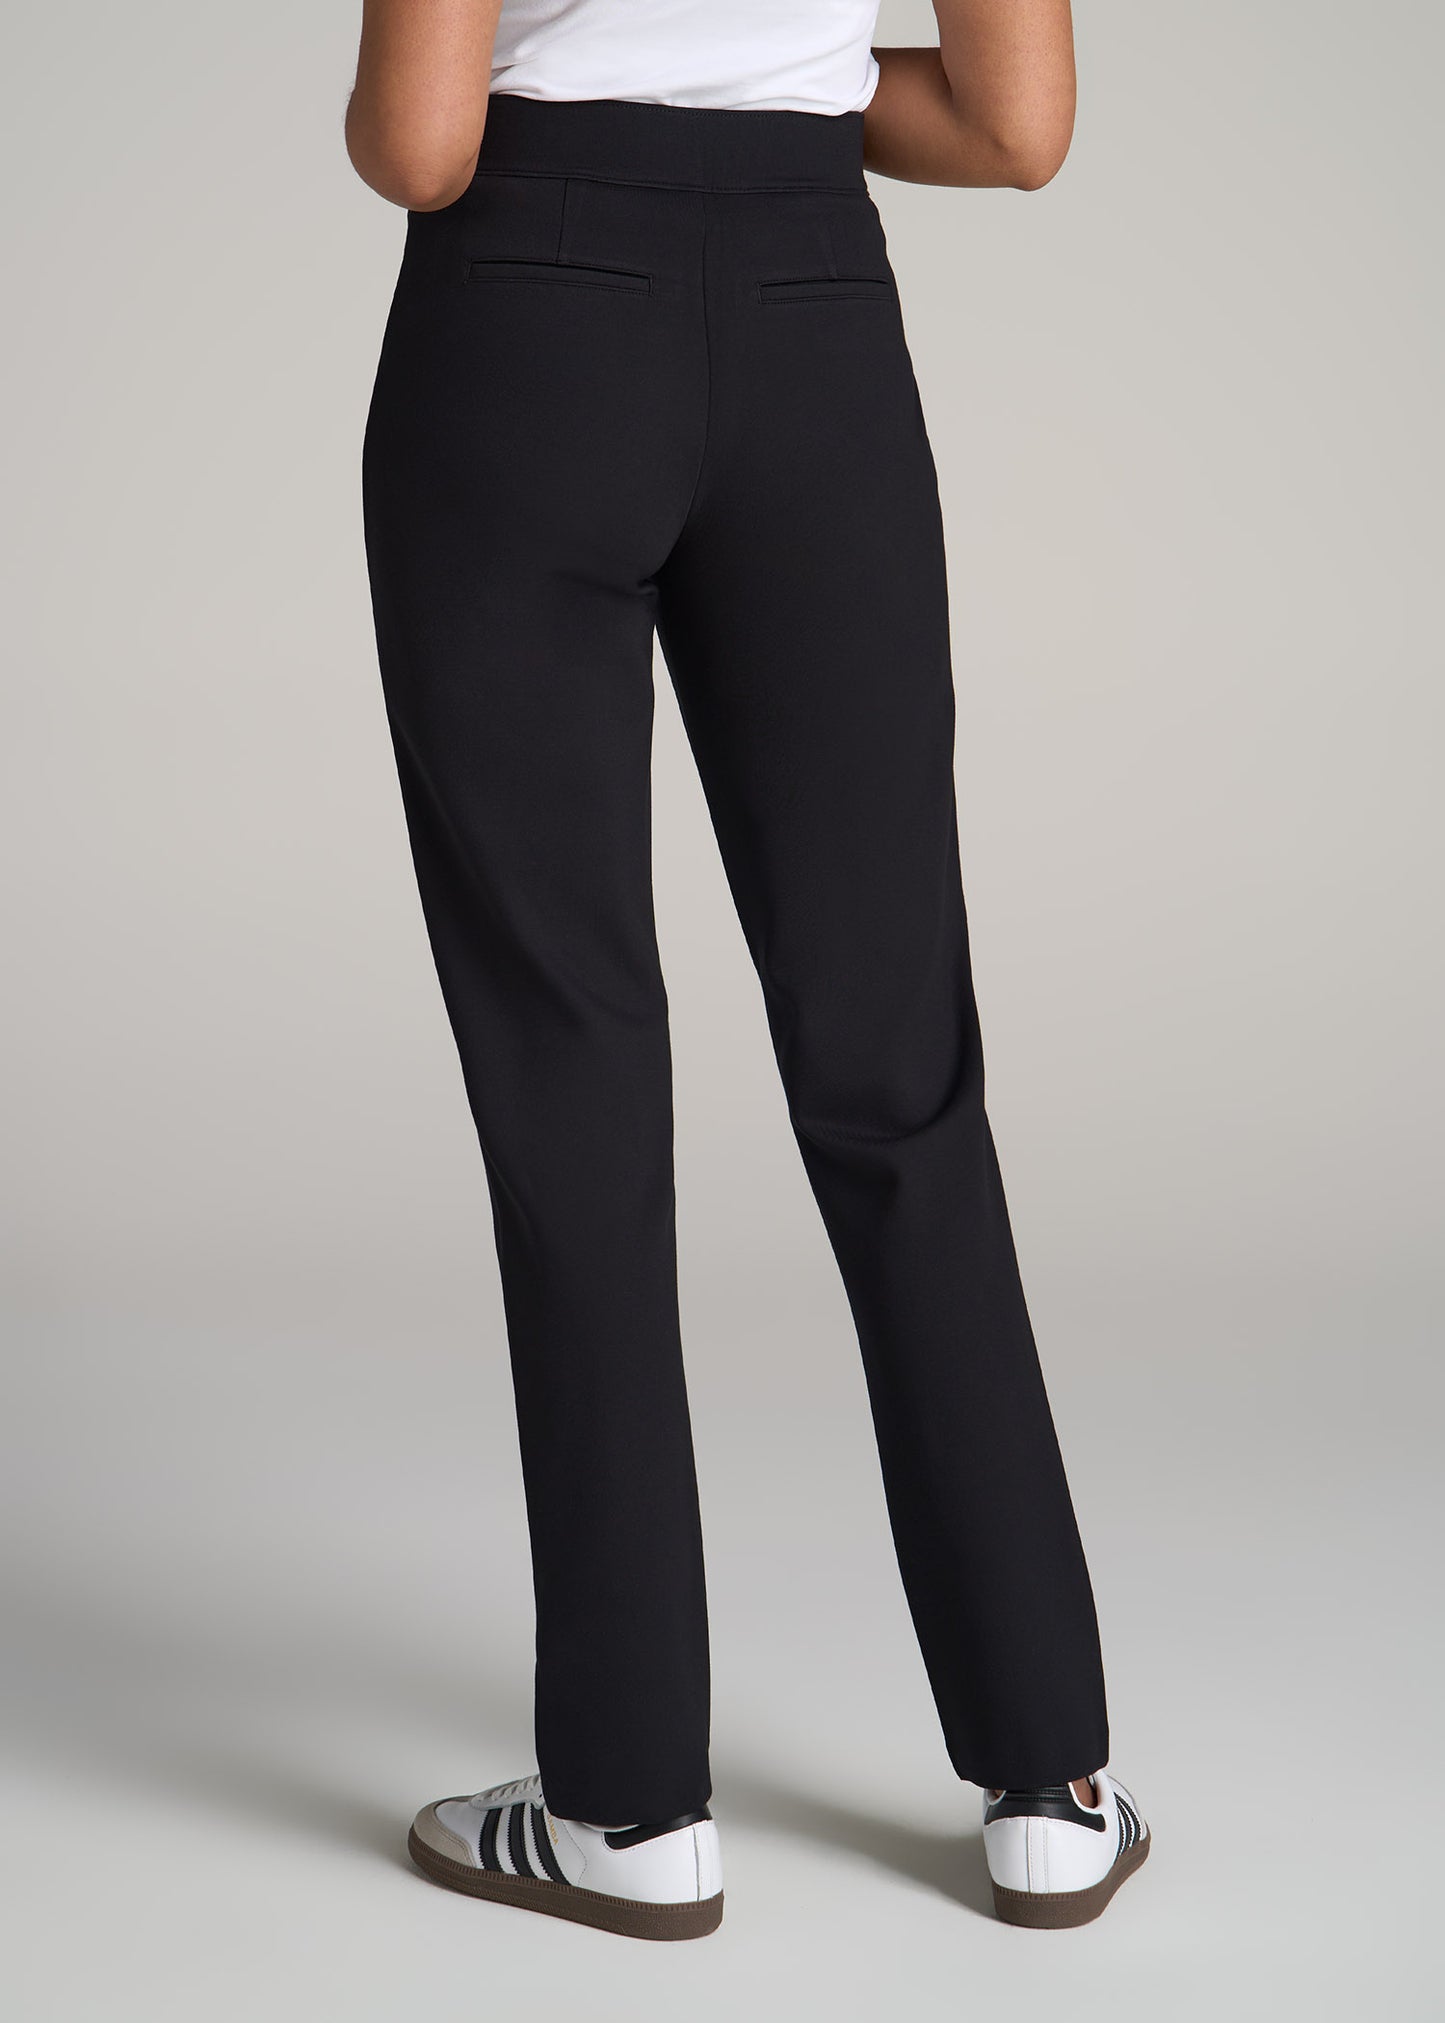 Pull-On Slim Dress Pants for Tall Women in Black 2 / Tall / Black